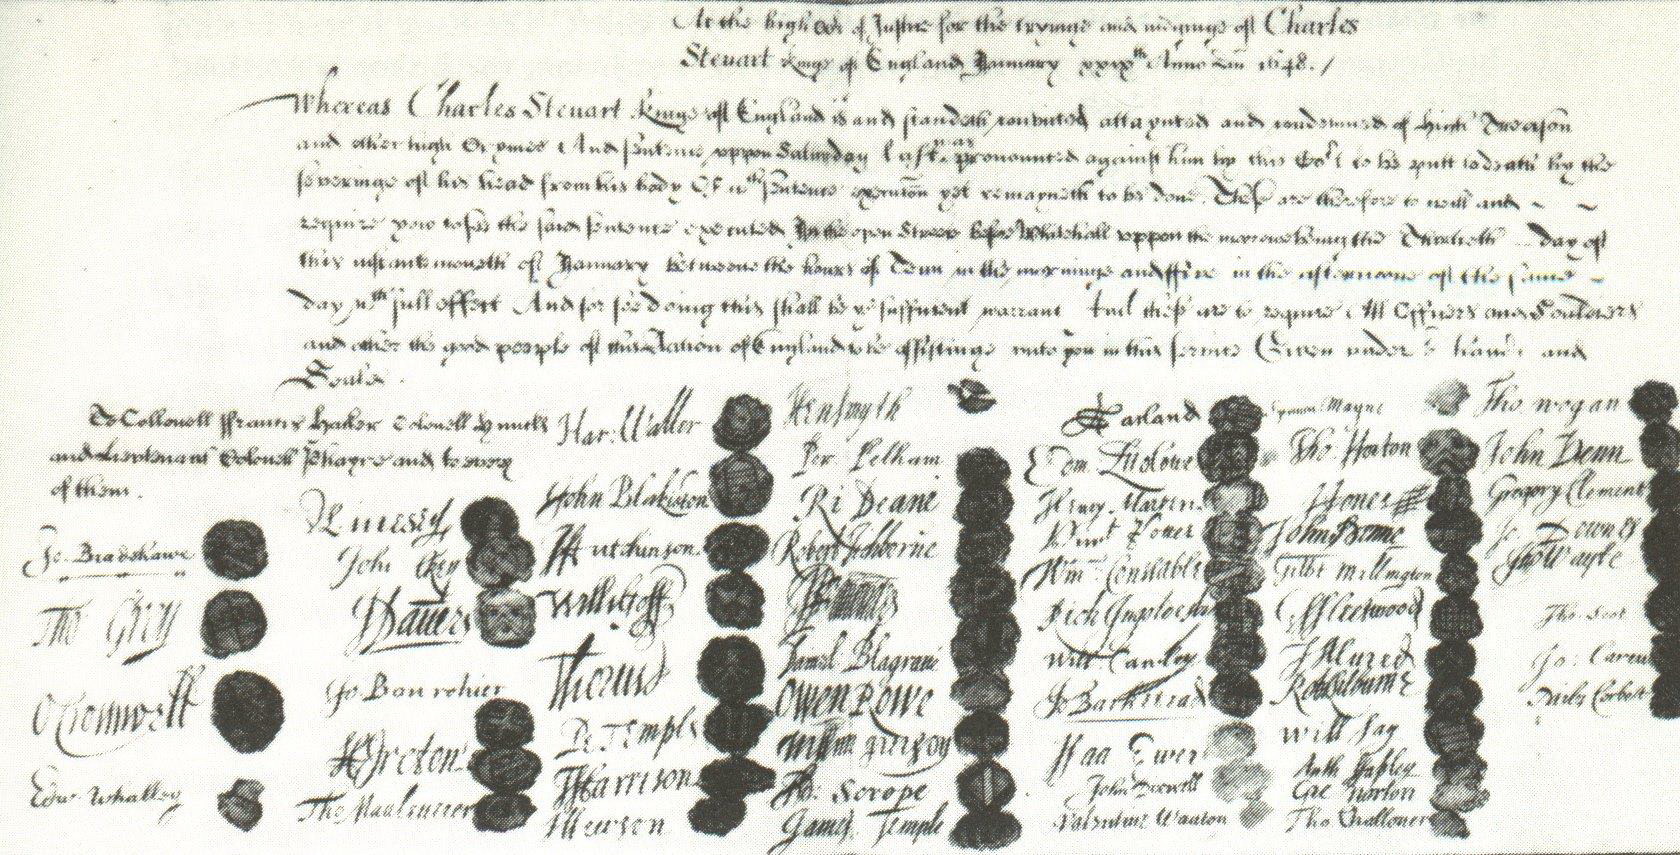 Hardress Waller signatory of Charles Ist Death Warrant 1649, January 27, 1649